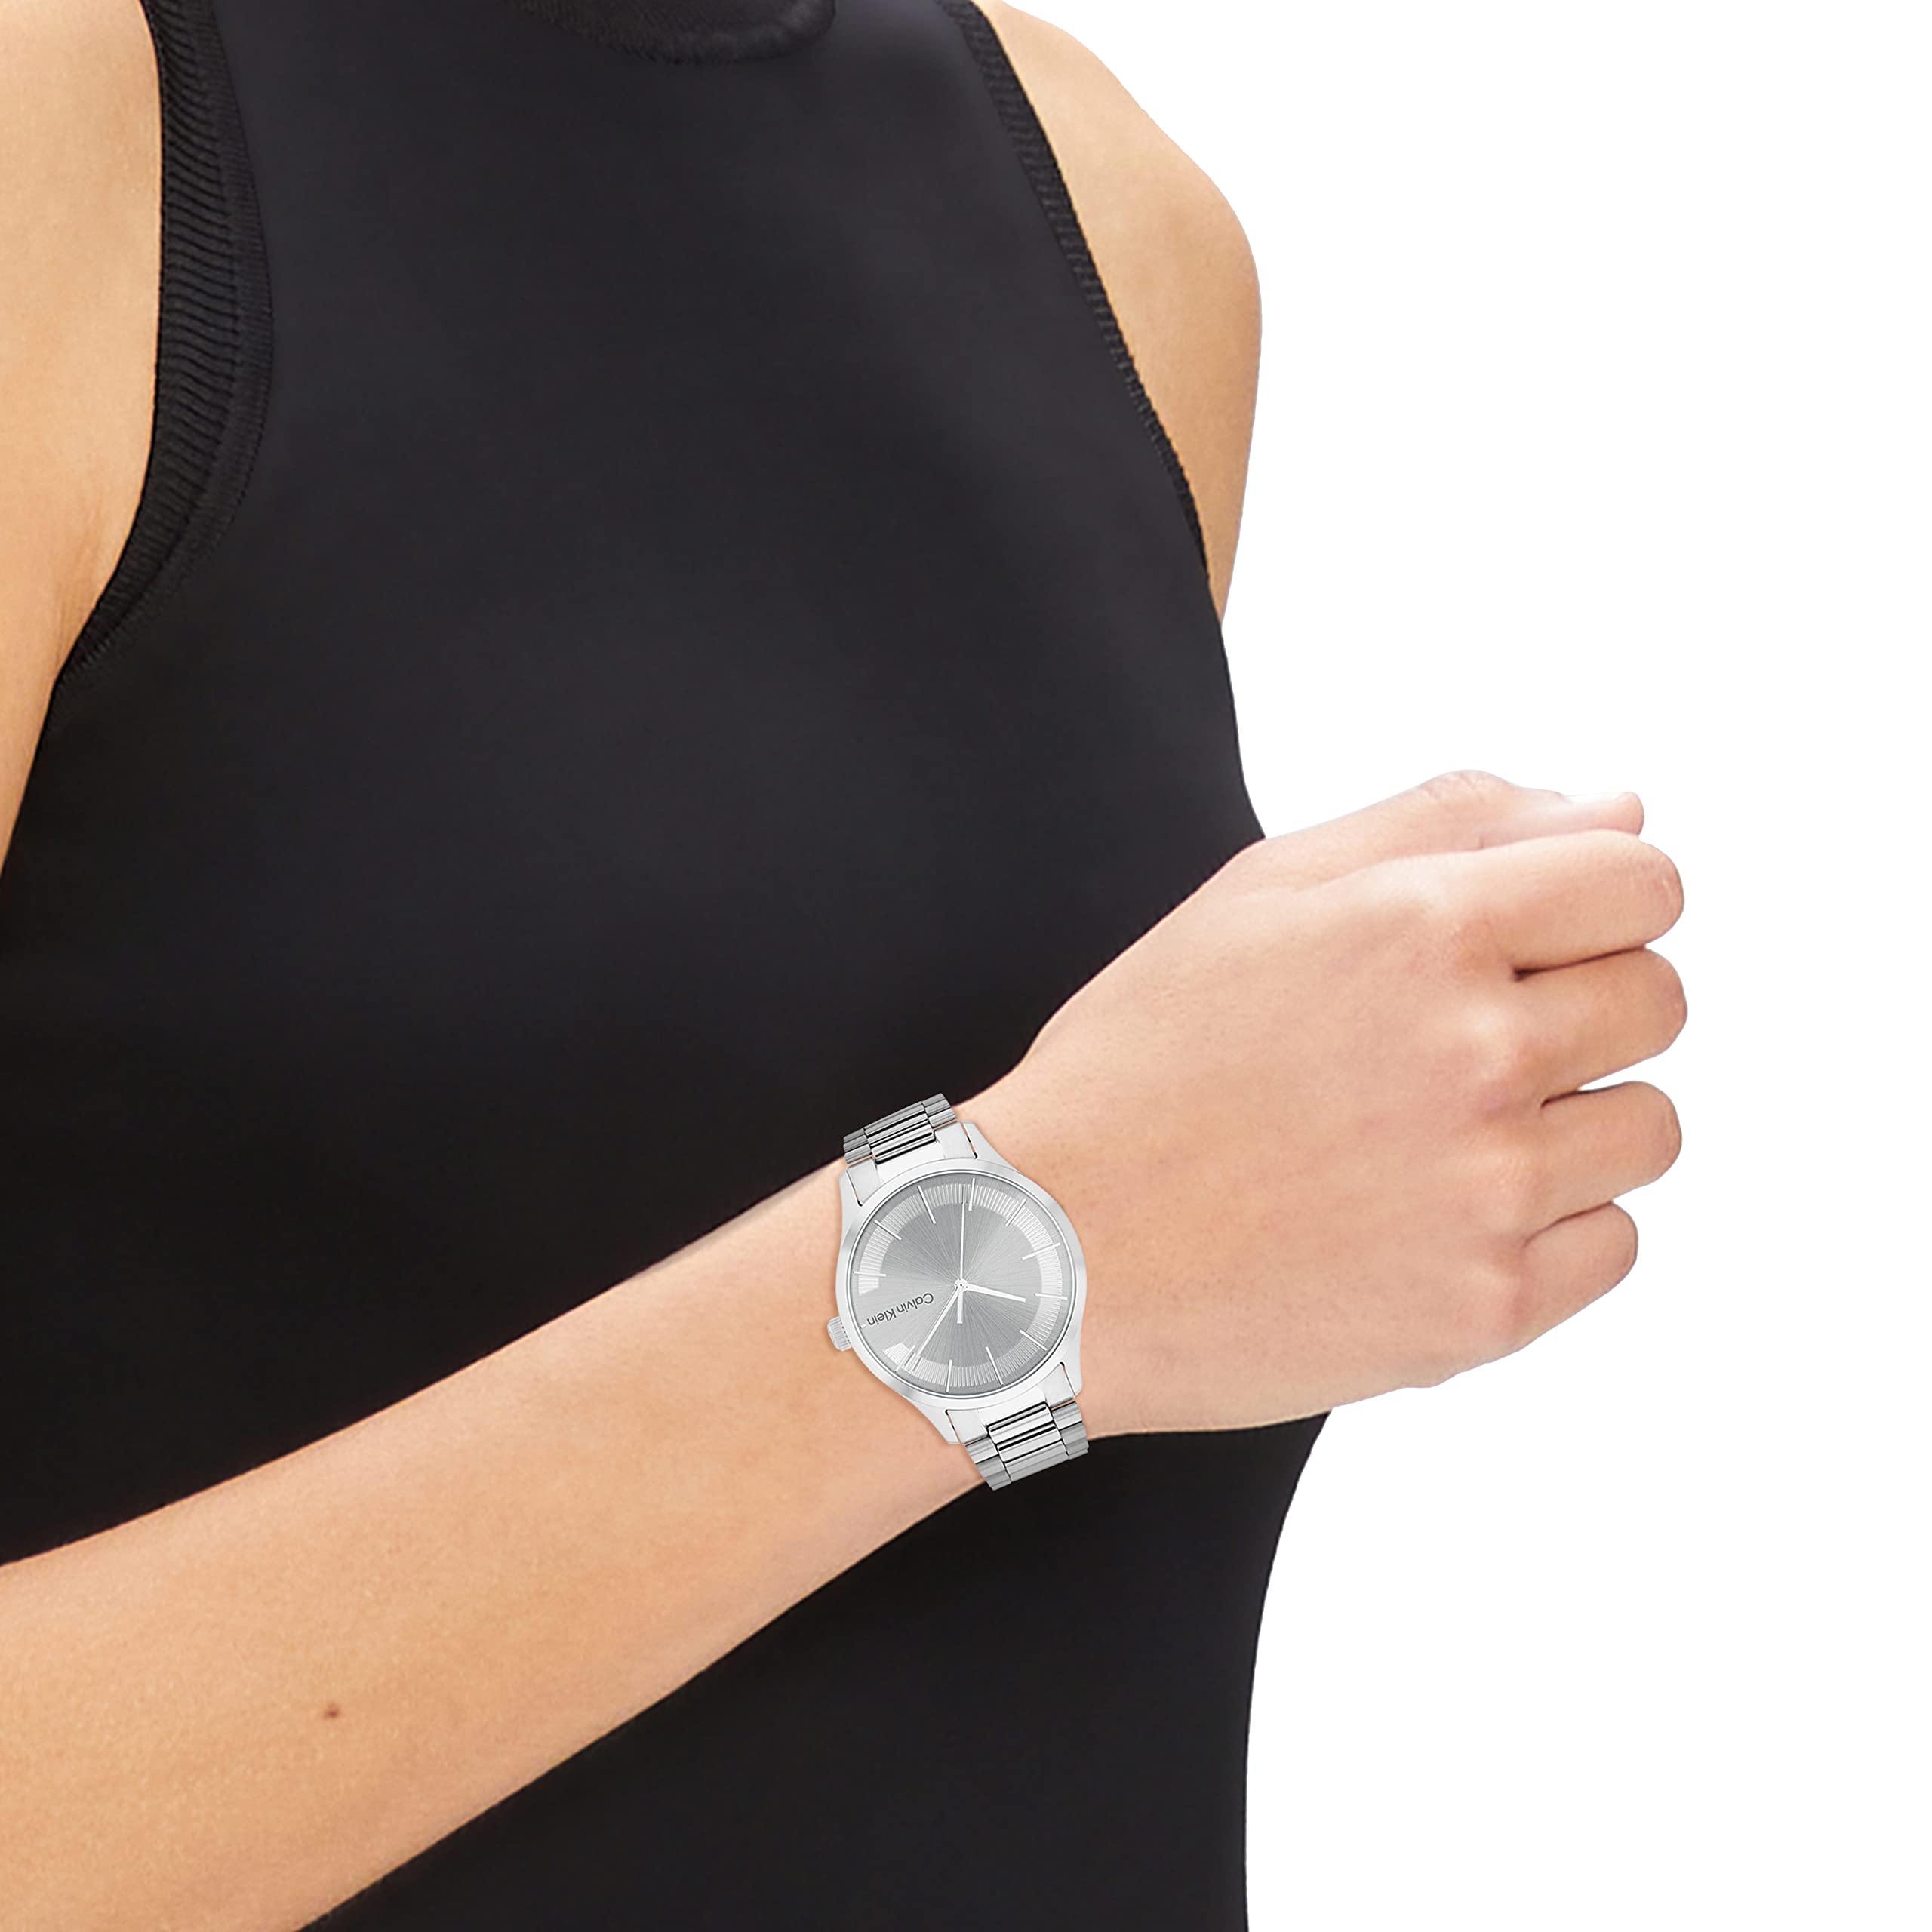 Calvin Klein Unisex Quartz Stainless Steel and Link Bracelet Watch, Color: Silver (Model: 25200036)